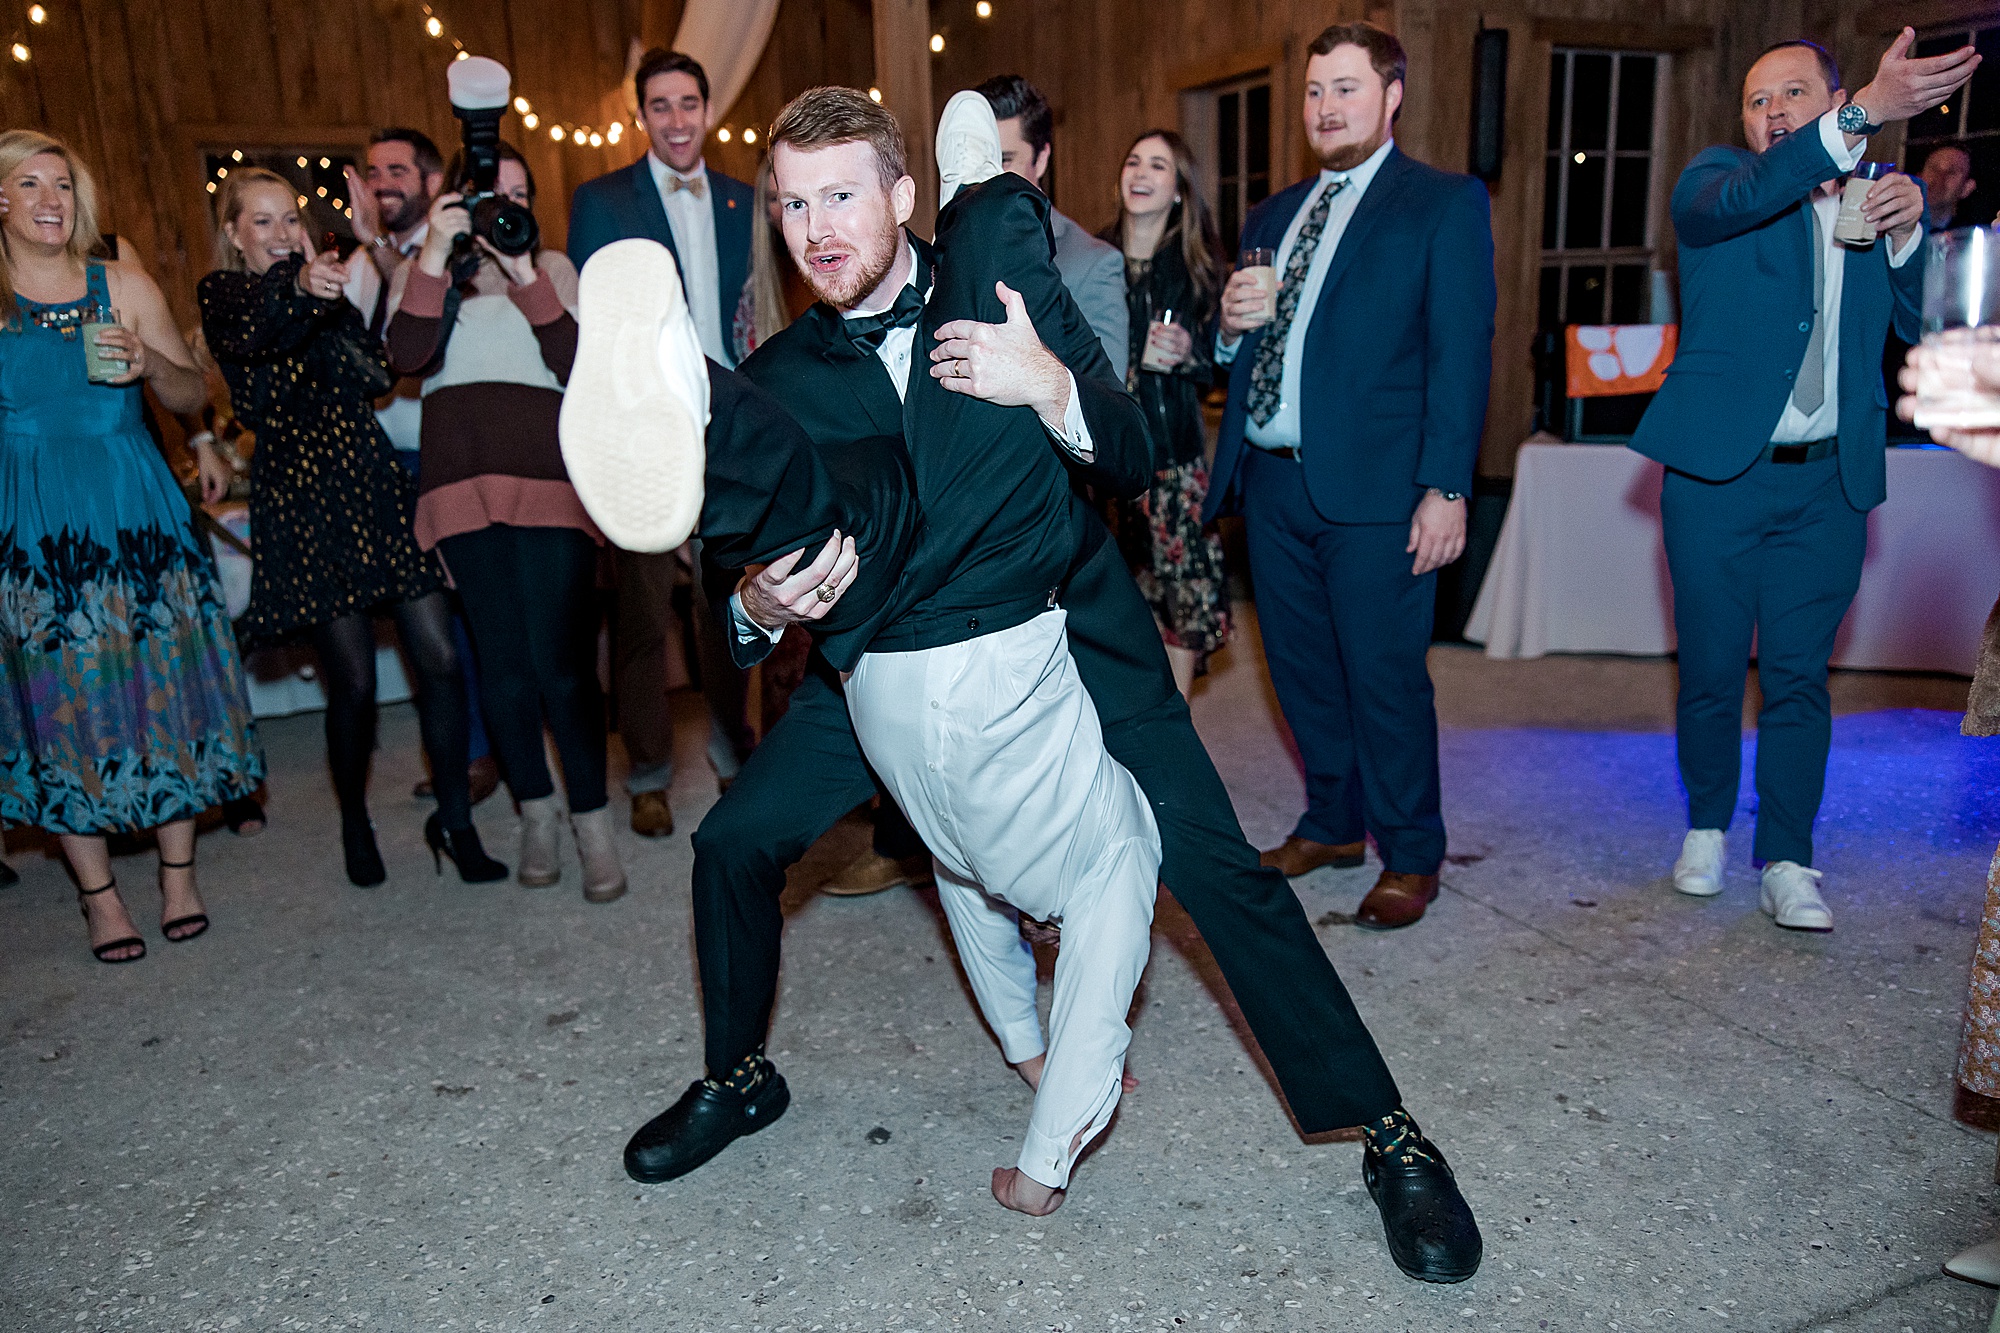 groom and groomsman have fun on the dance floor